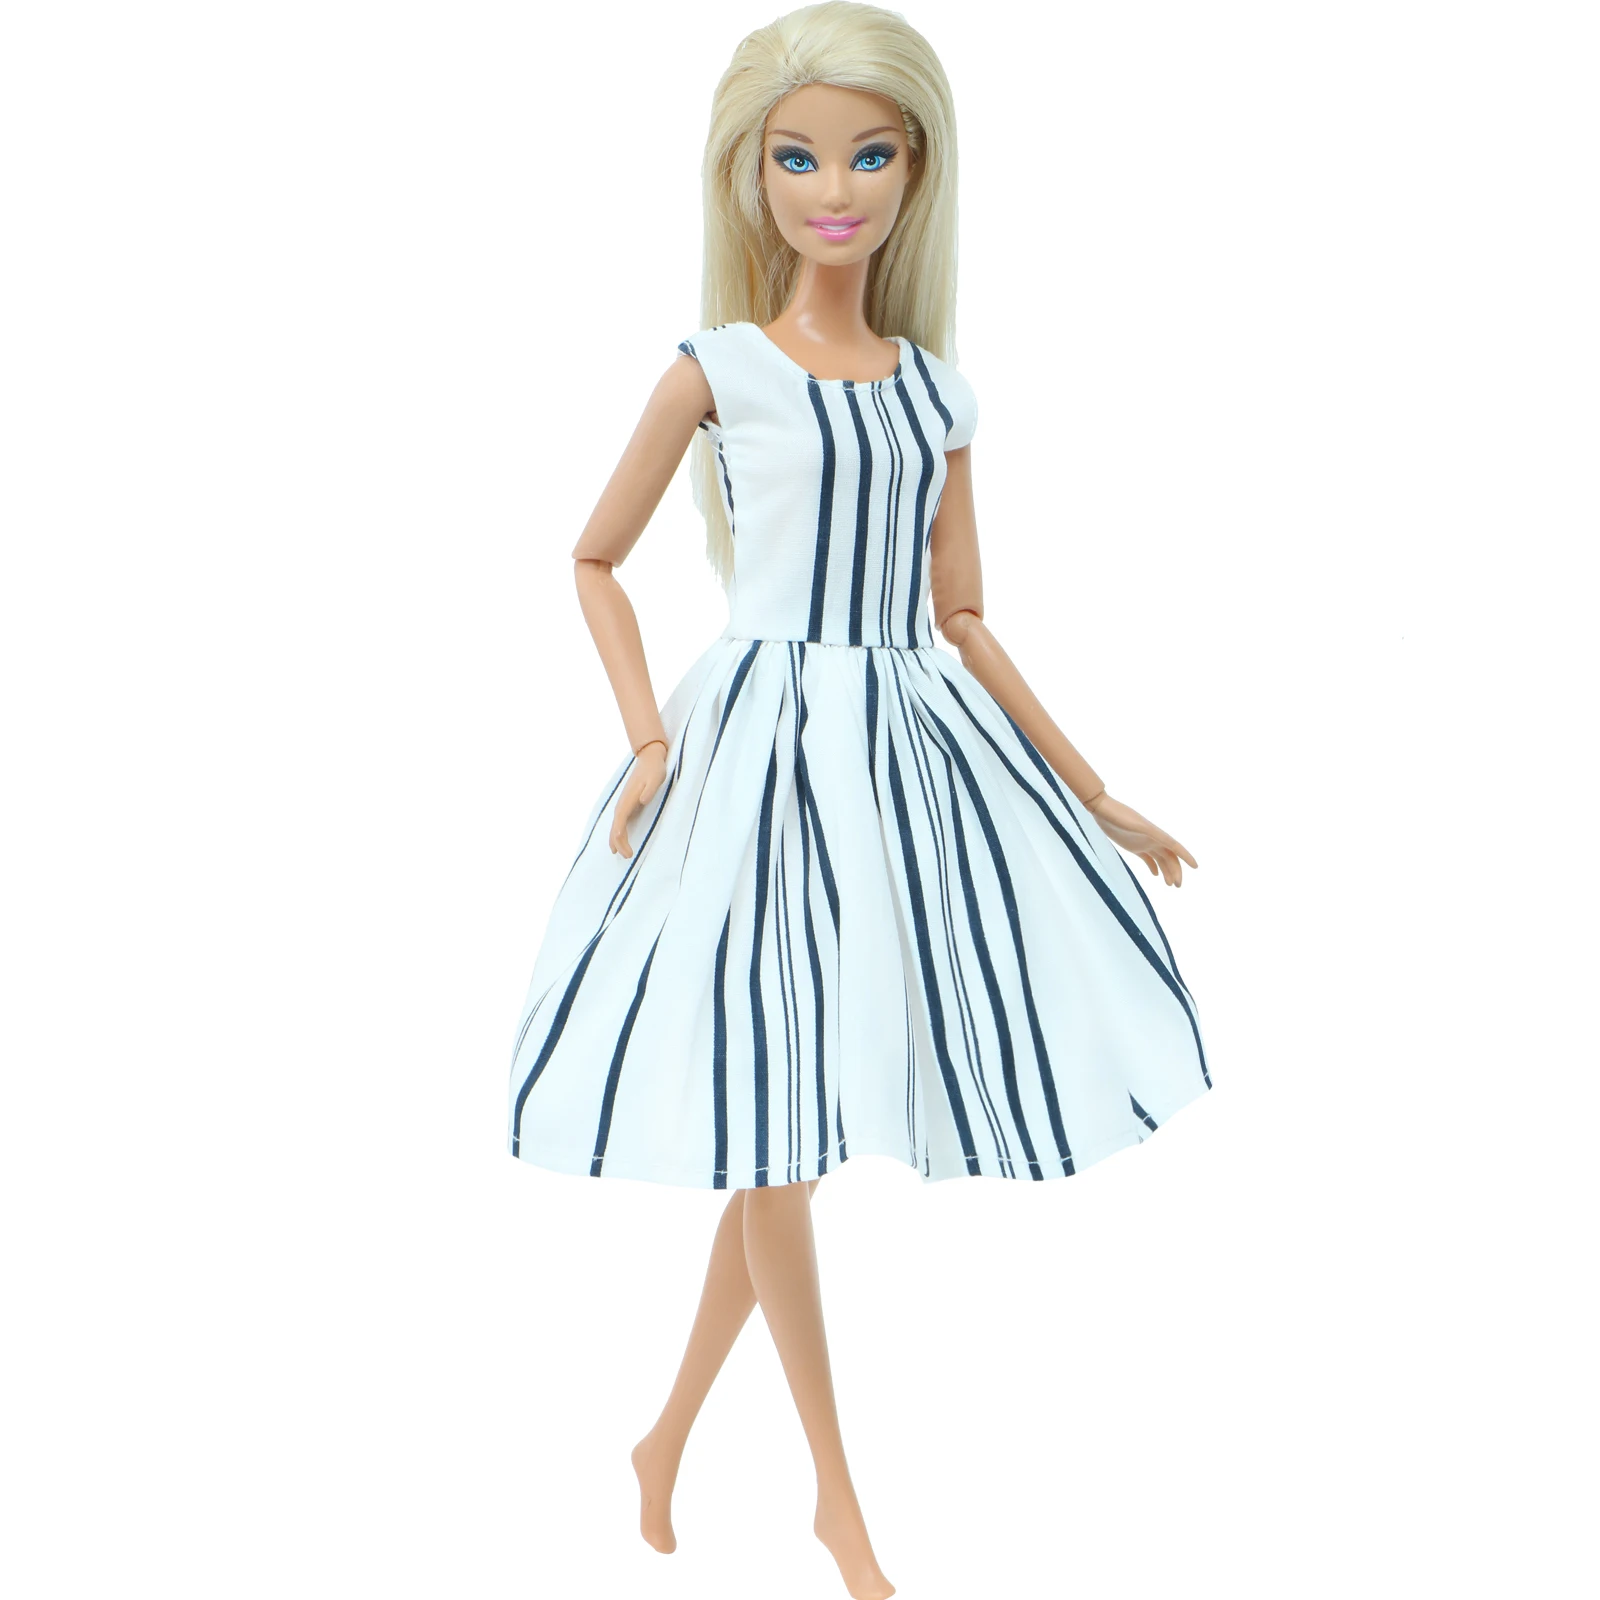 Dress Details about   11 1/2"  Barbie Doll Clothing Black/white stripes print Top Black Pants 